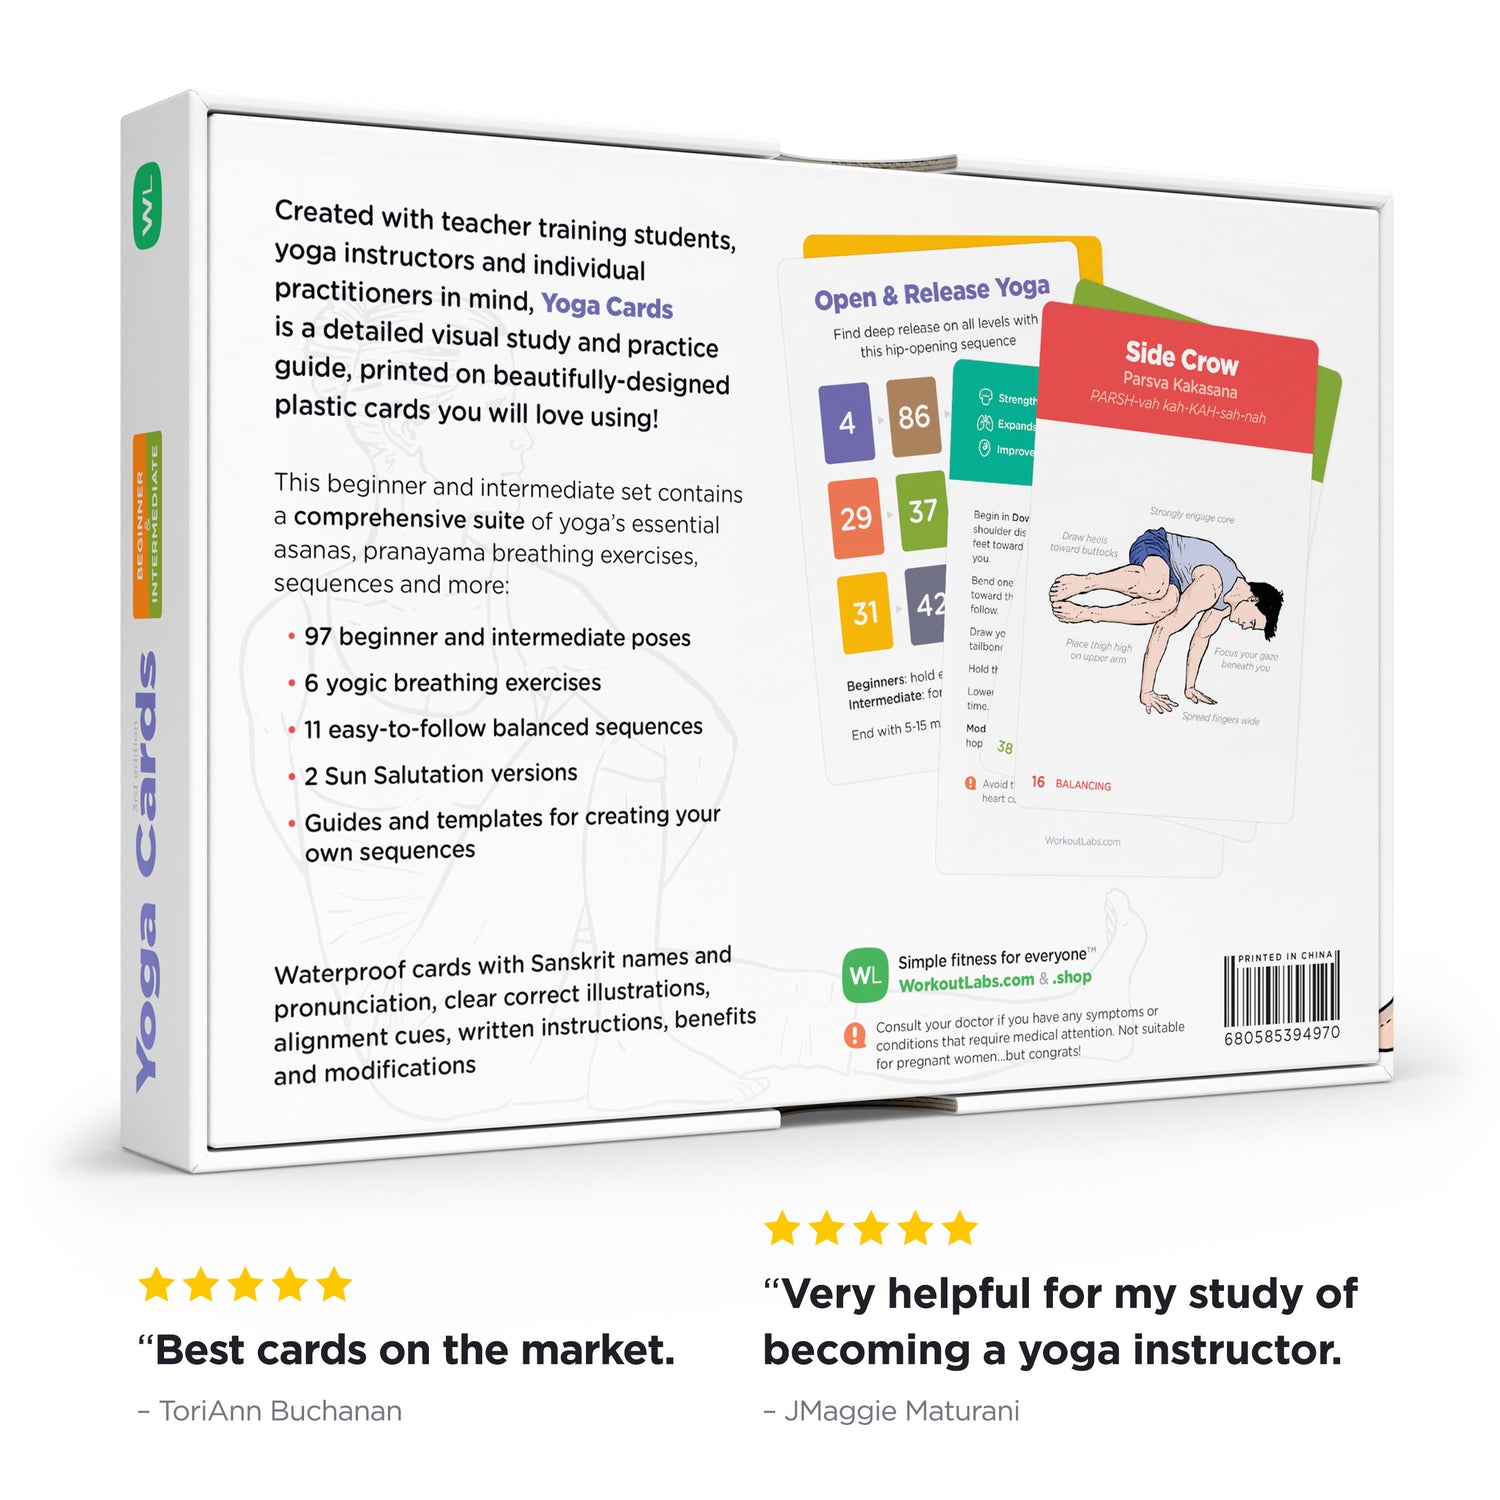 Yoga Cards, Yoga Cards Volume II & 'Intuition' Blank Lined Journal Bun –  High Desert Yogi